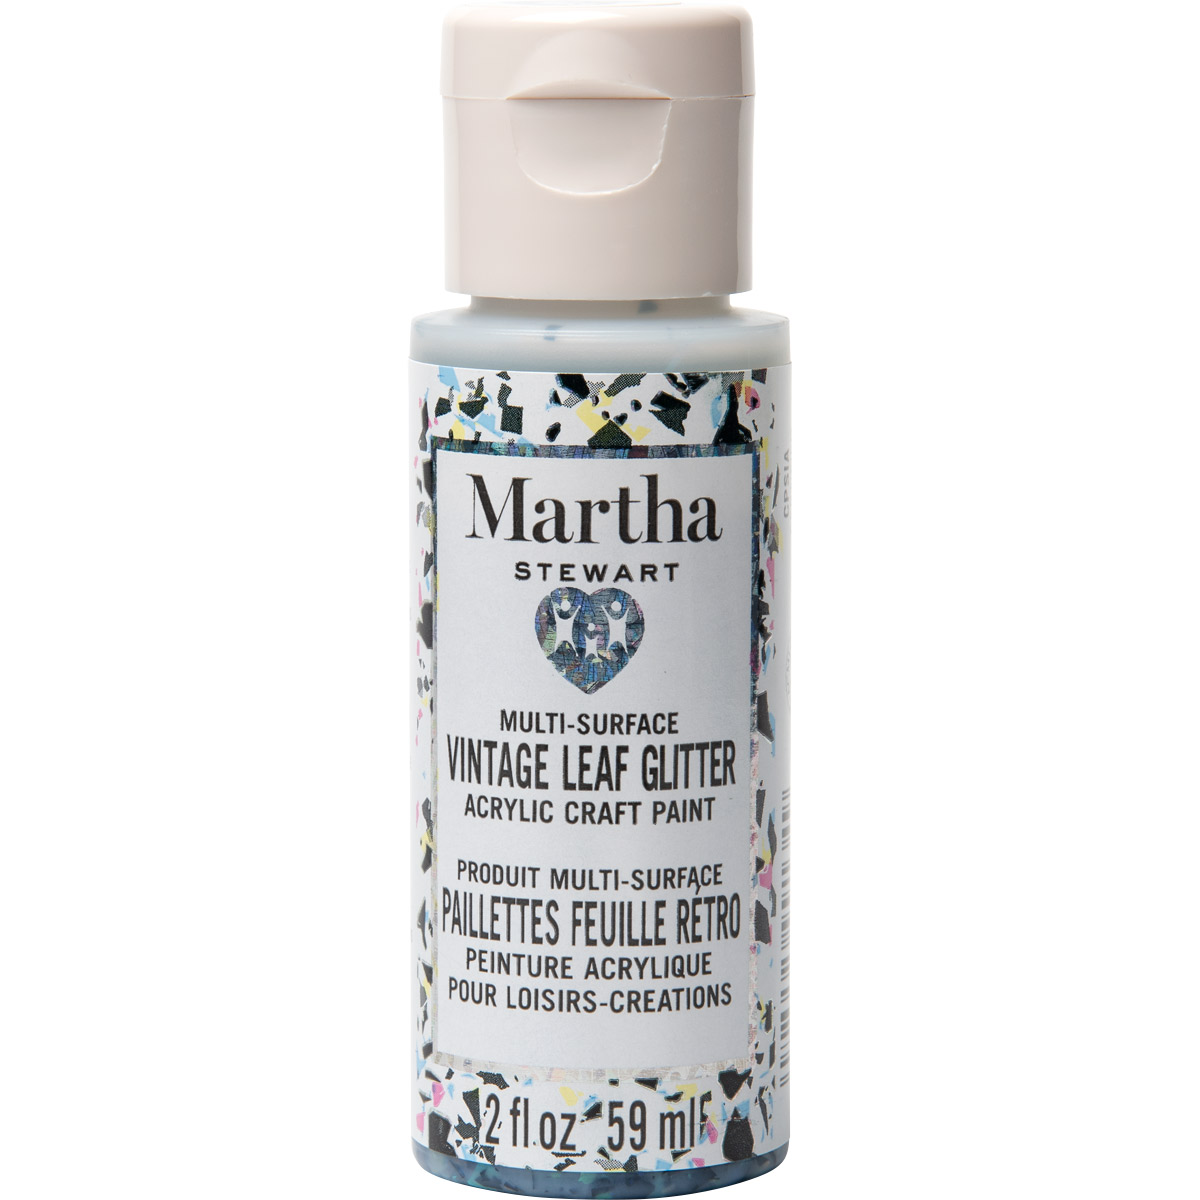 Martha Stewart ® Multi-Surface Vintage Leaf Glitter Acrylic Craft Paint CPSIA - Licorice, 2 oz. - 99